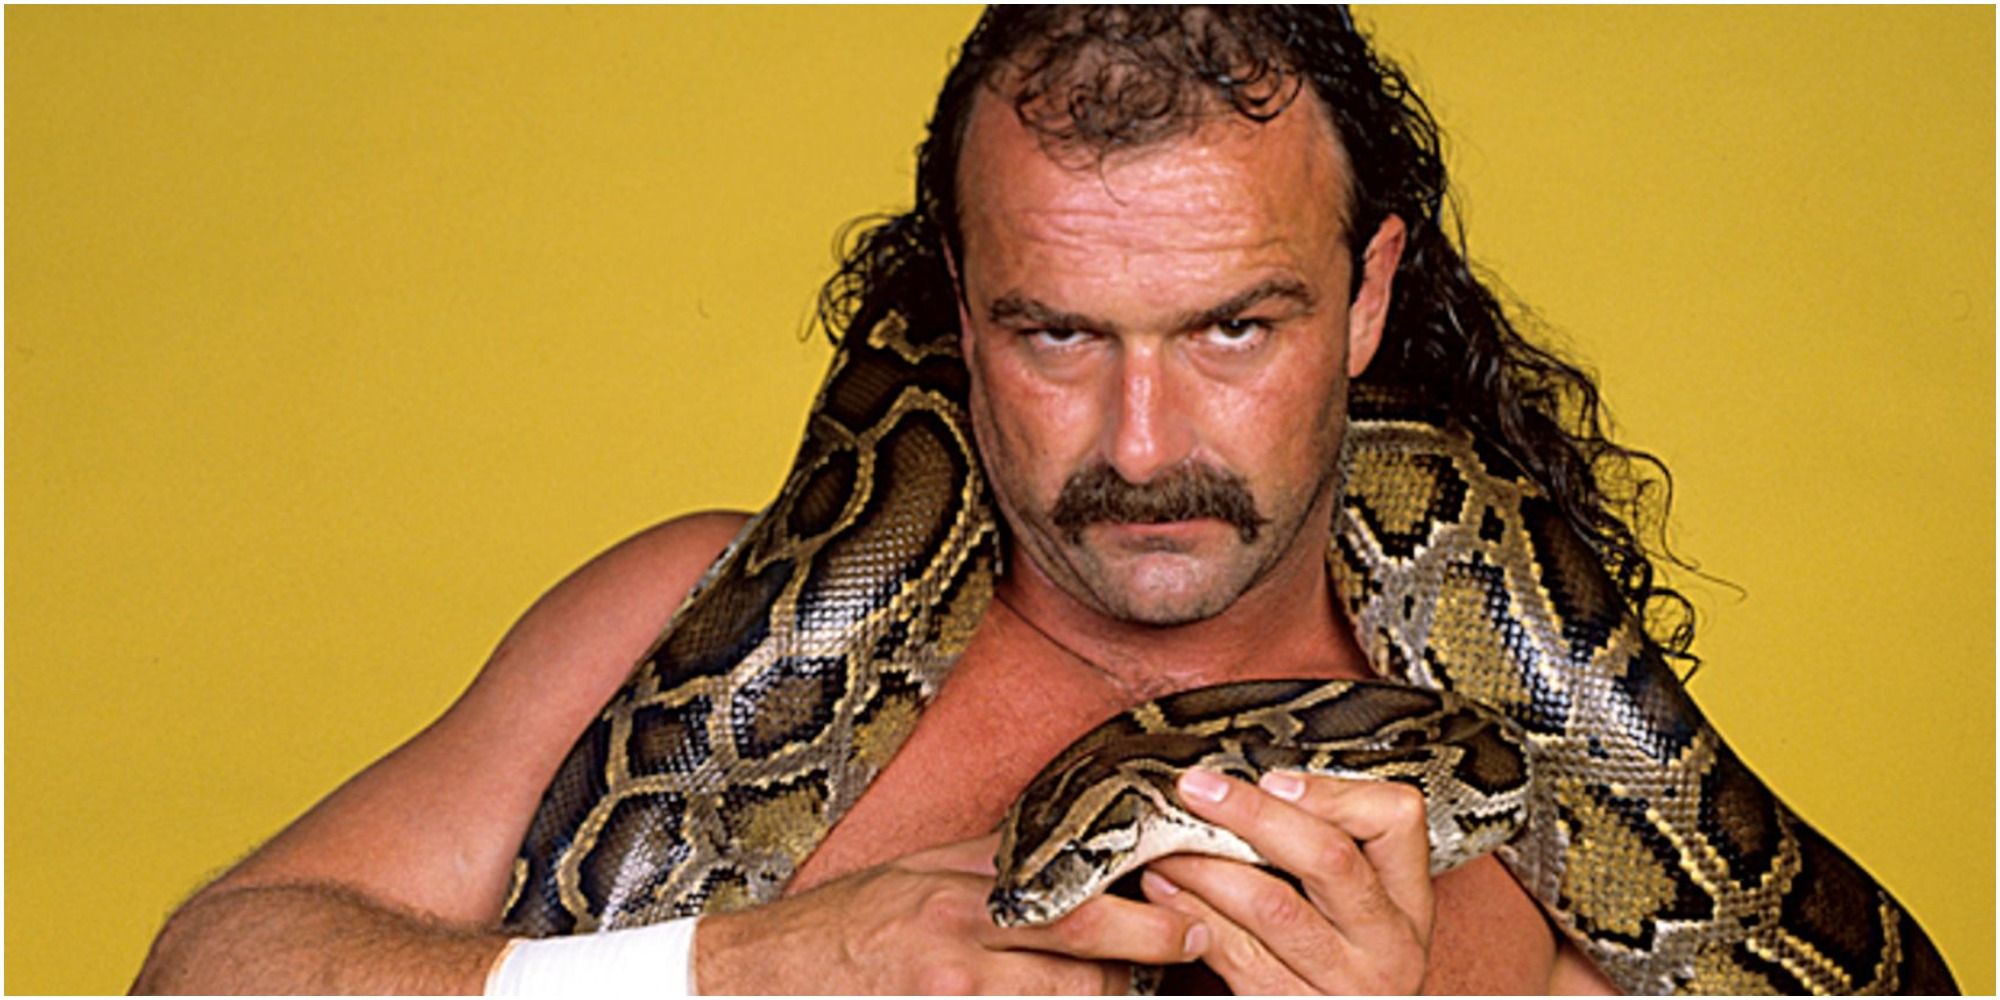 WWE star Jake the snake Roberts